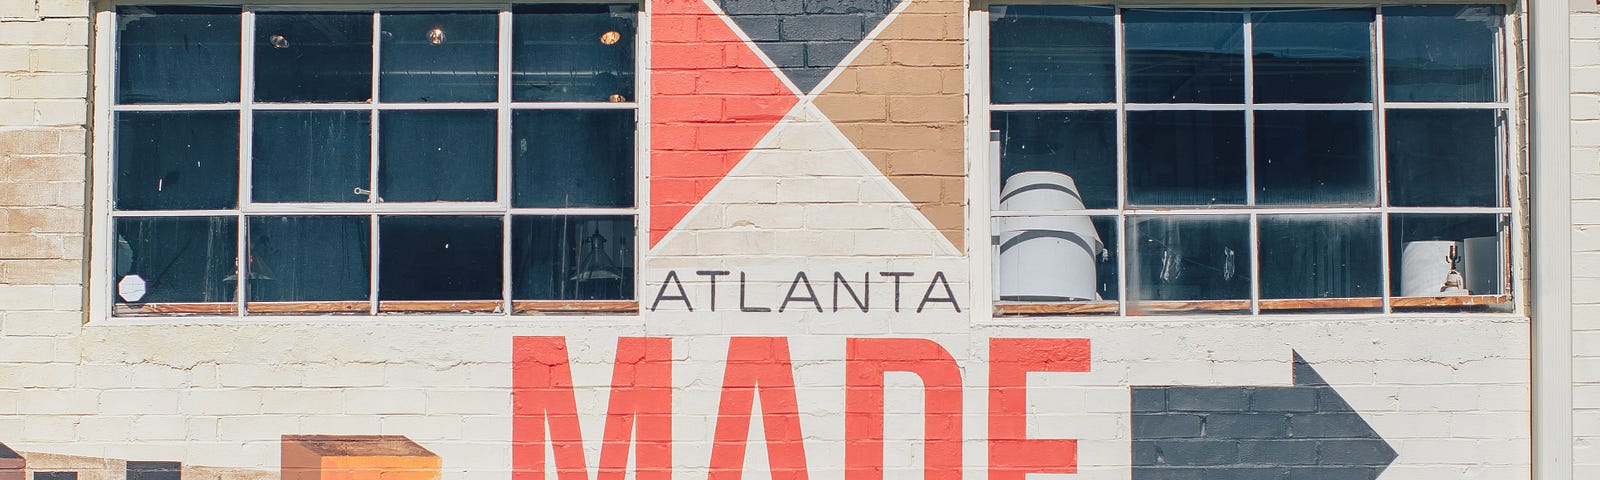 Photo of graffiti that reads “Atlanta Made.”